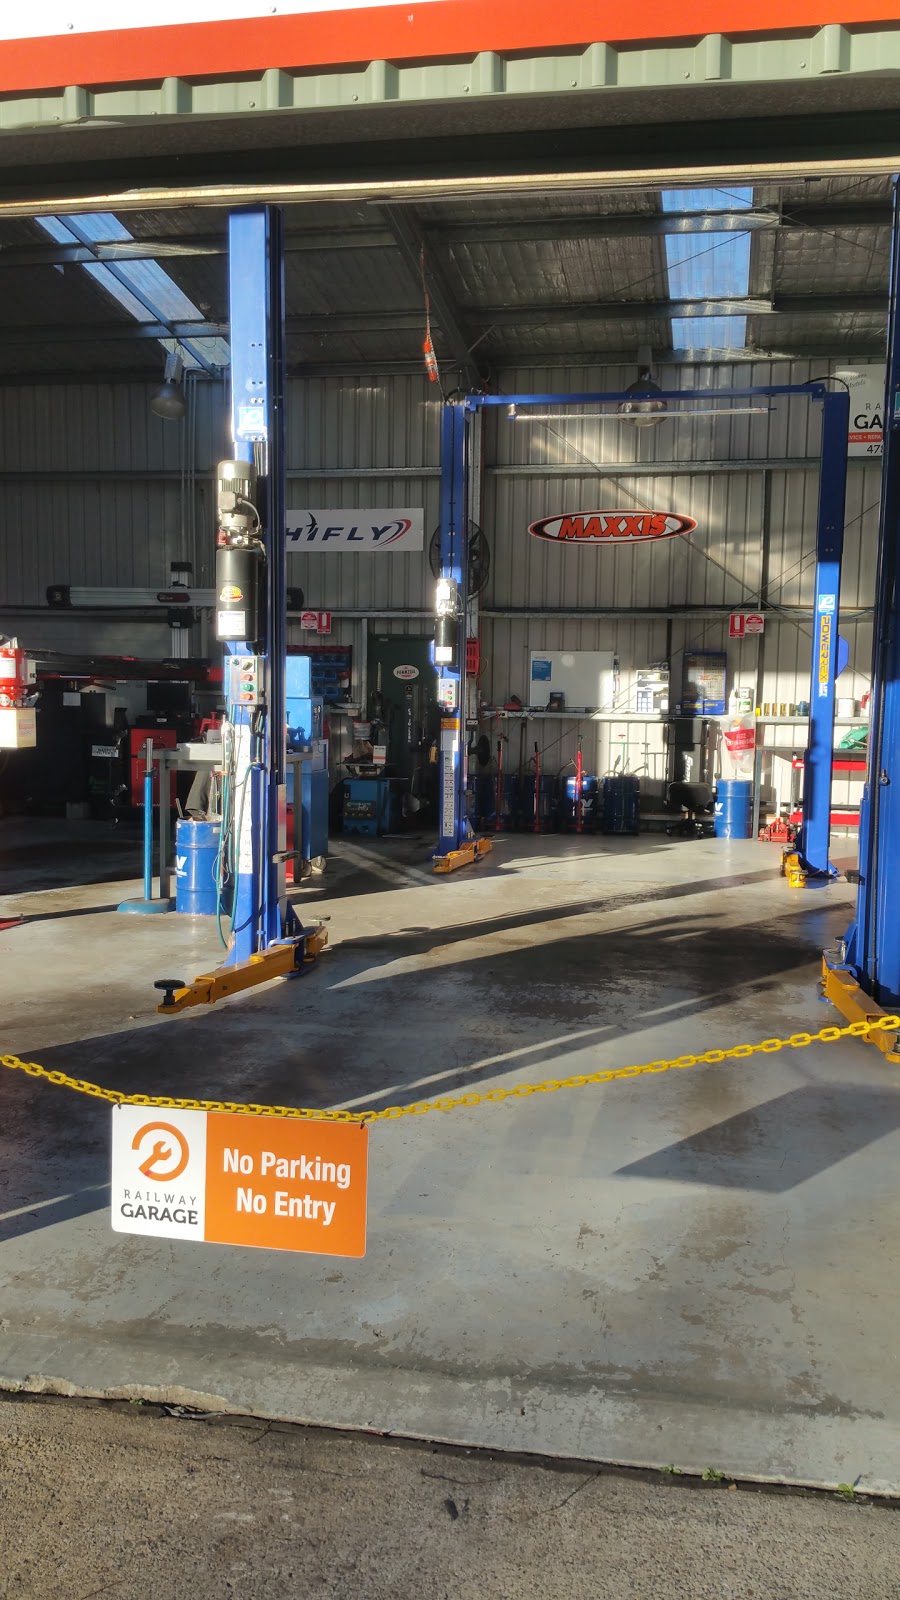 Railway Garage | car repair | 1/64 Govett St, Katoomba NSW 2780, Australia | 0247824092 OR +61 2 4782 4092